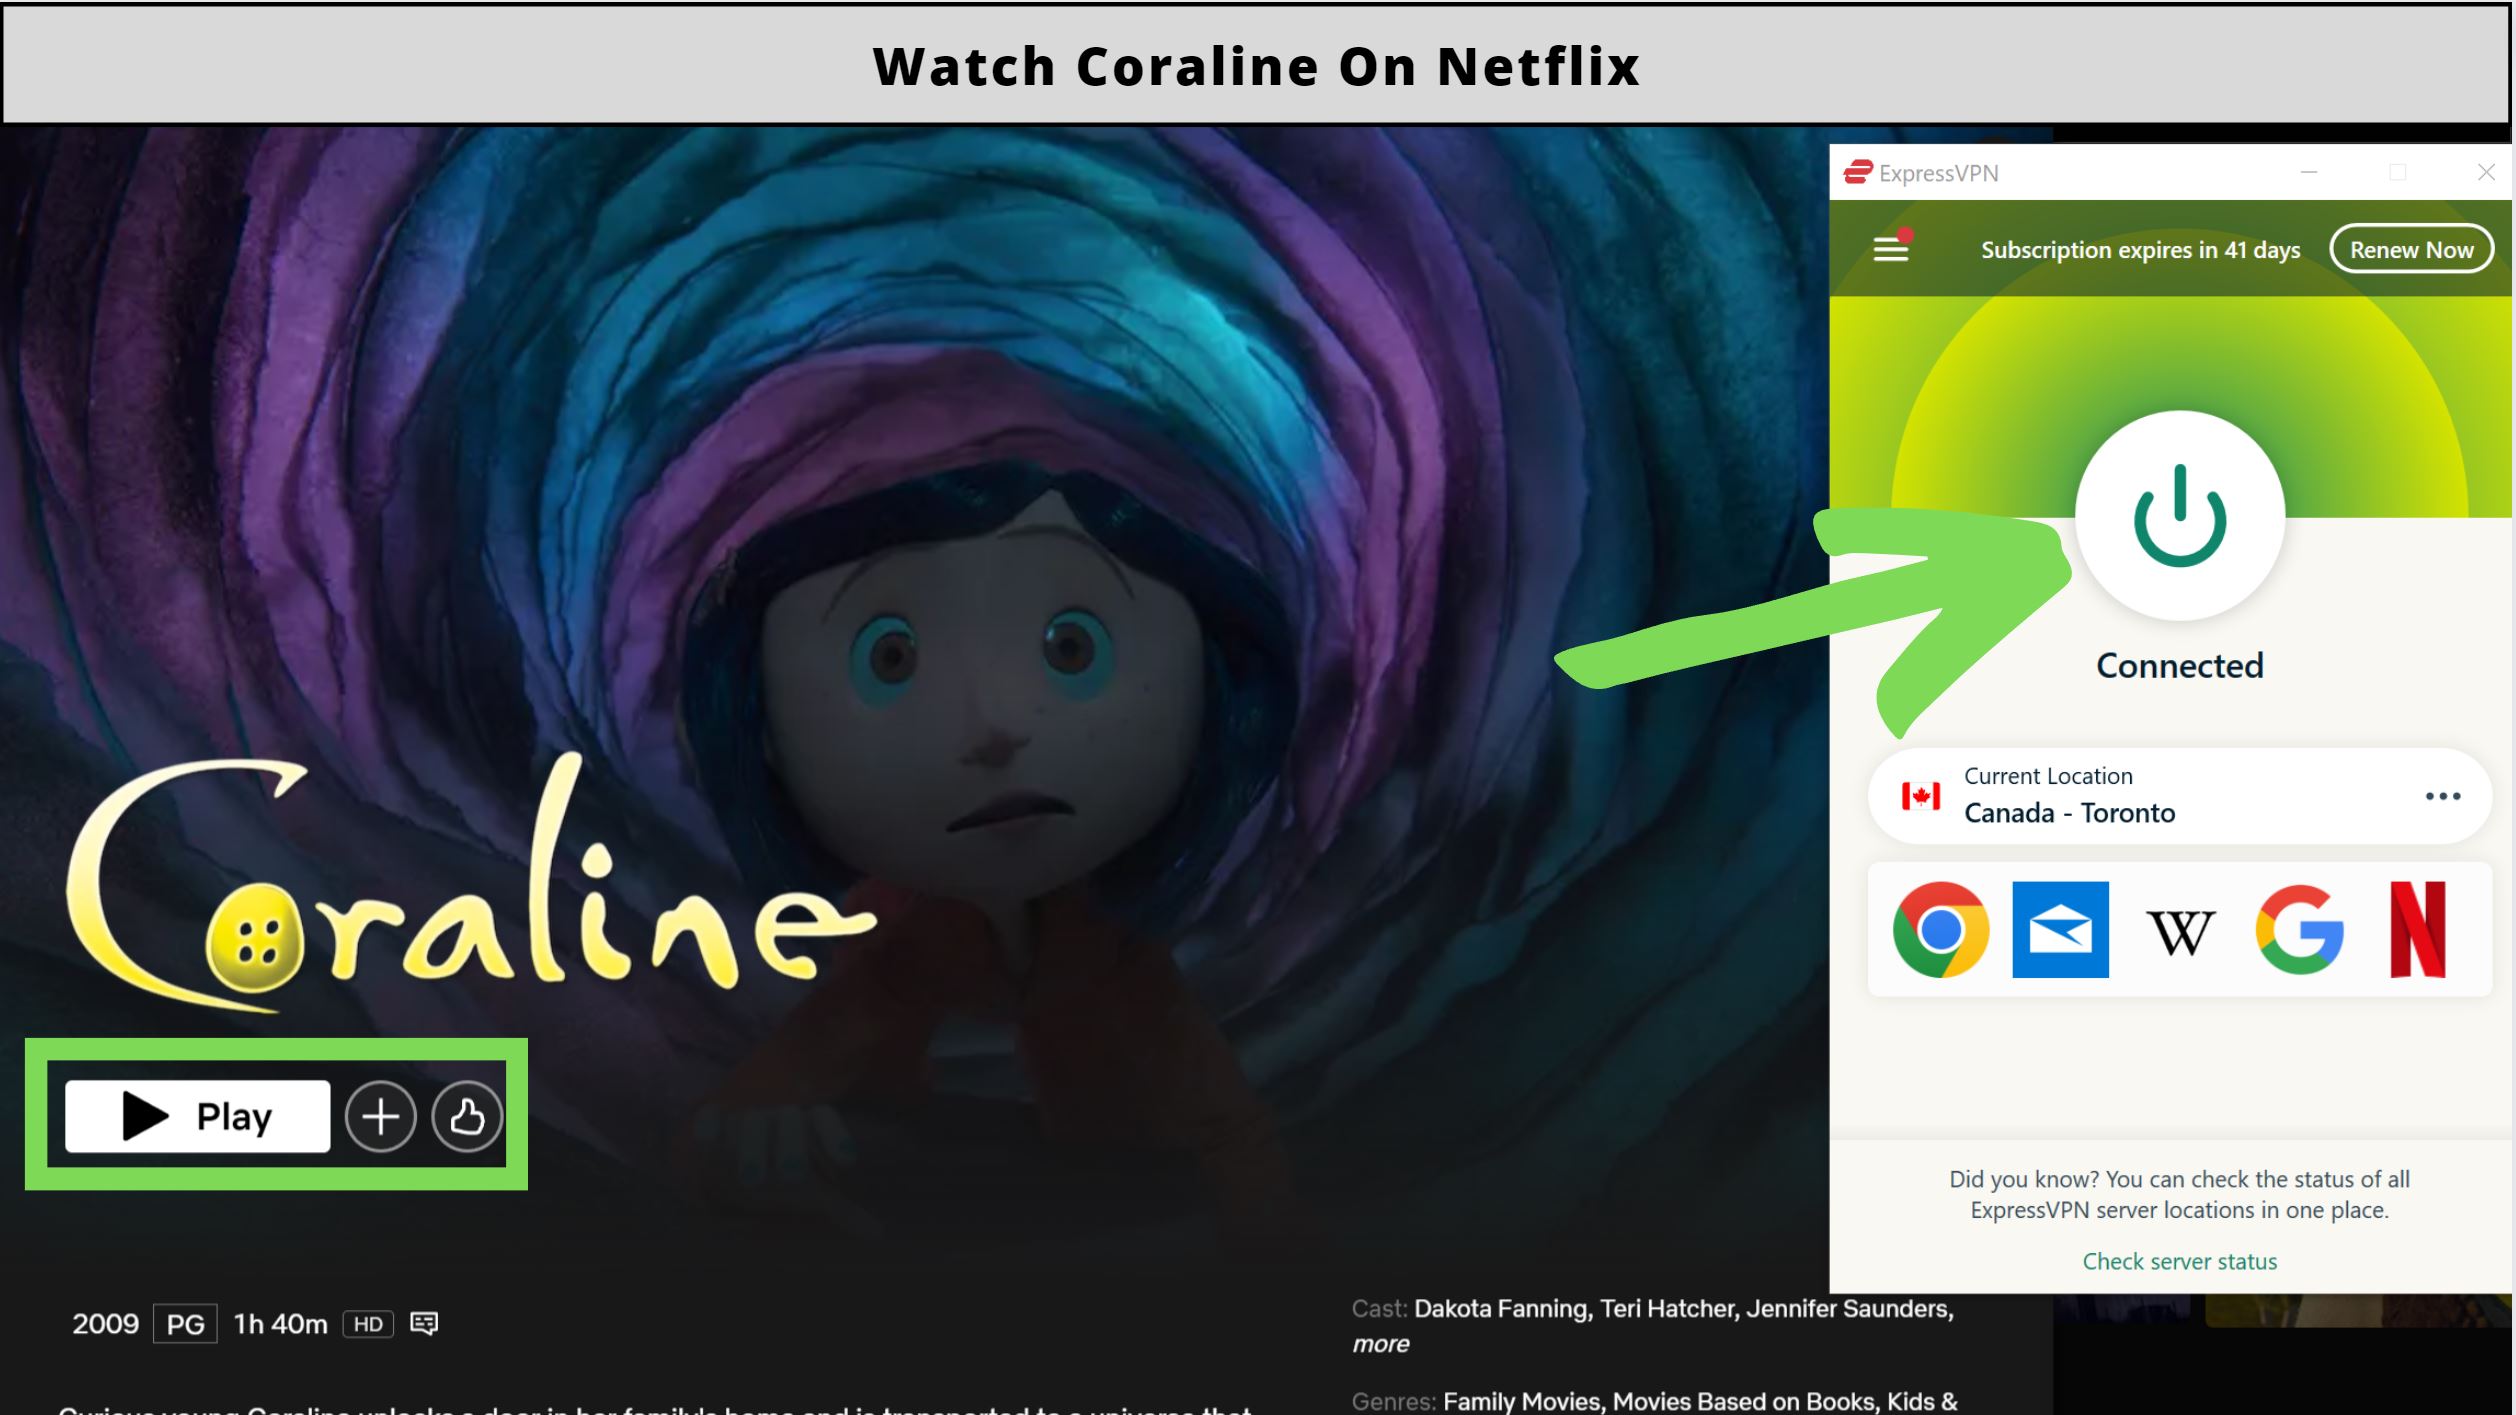 Is Coraline On Netflix?